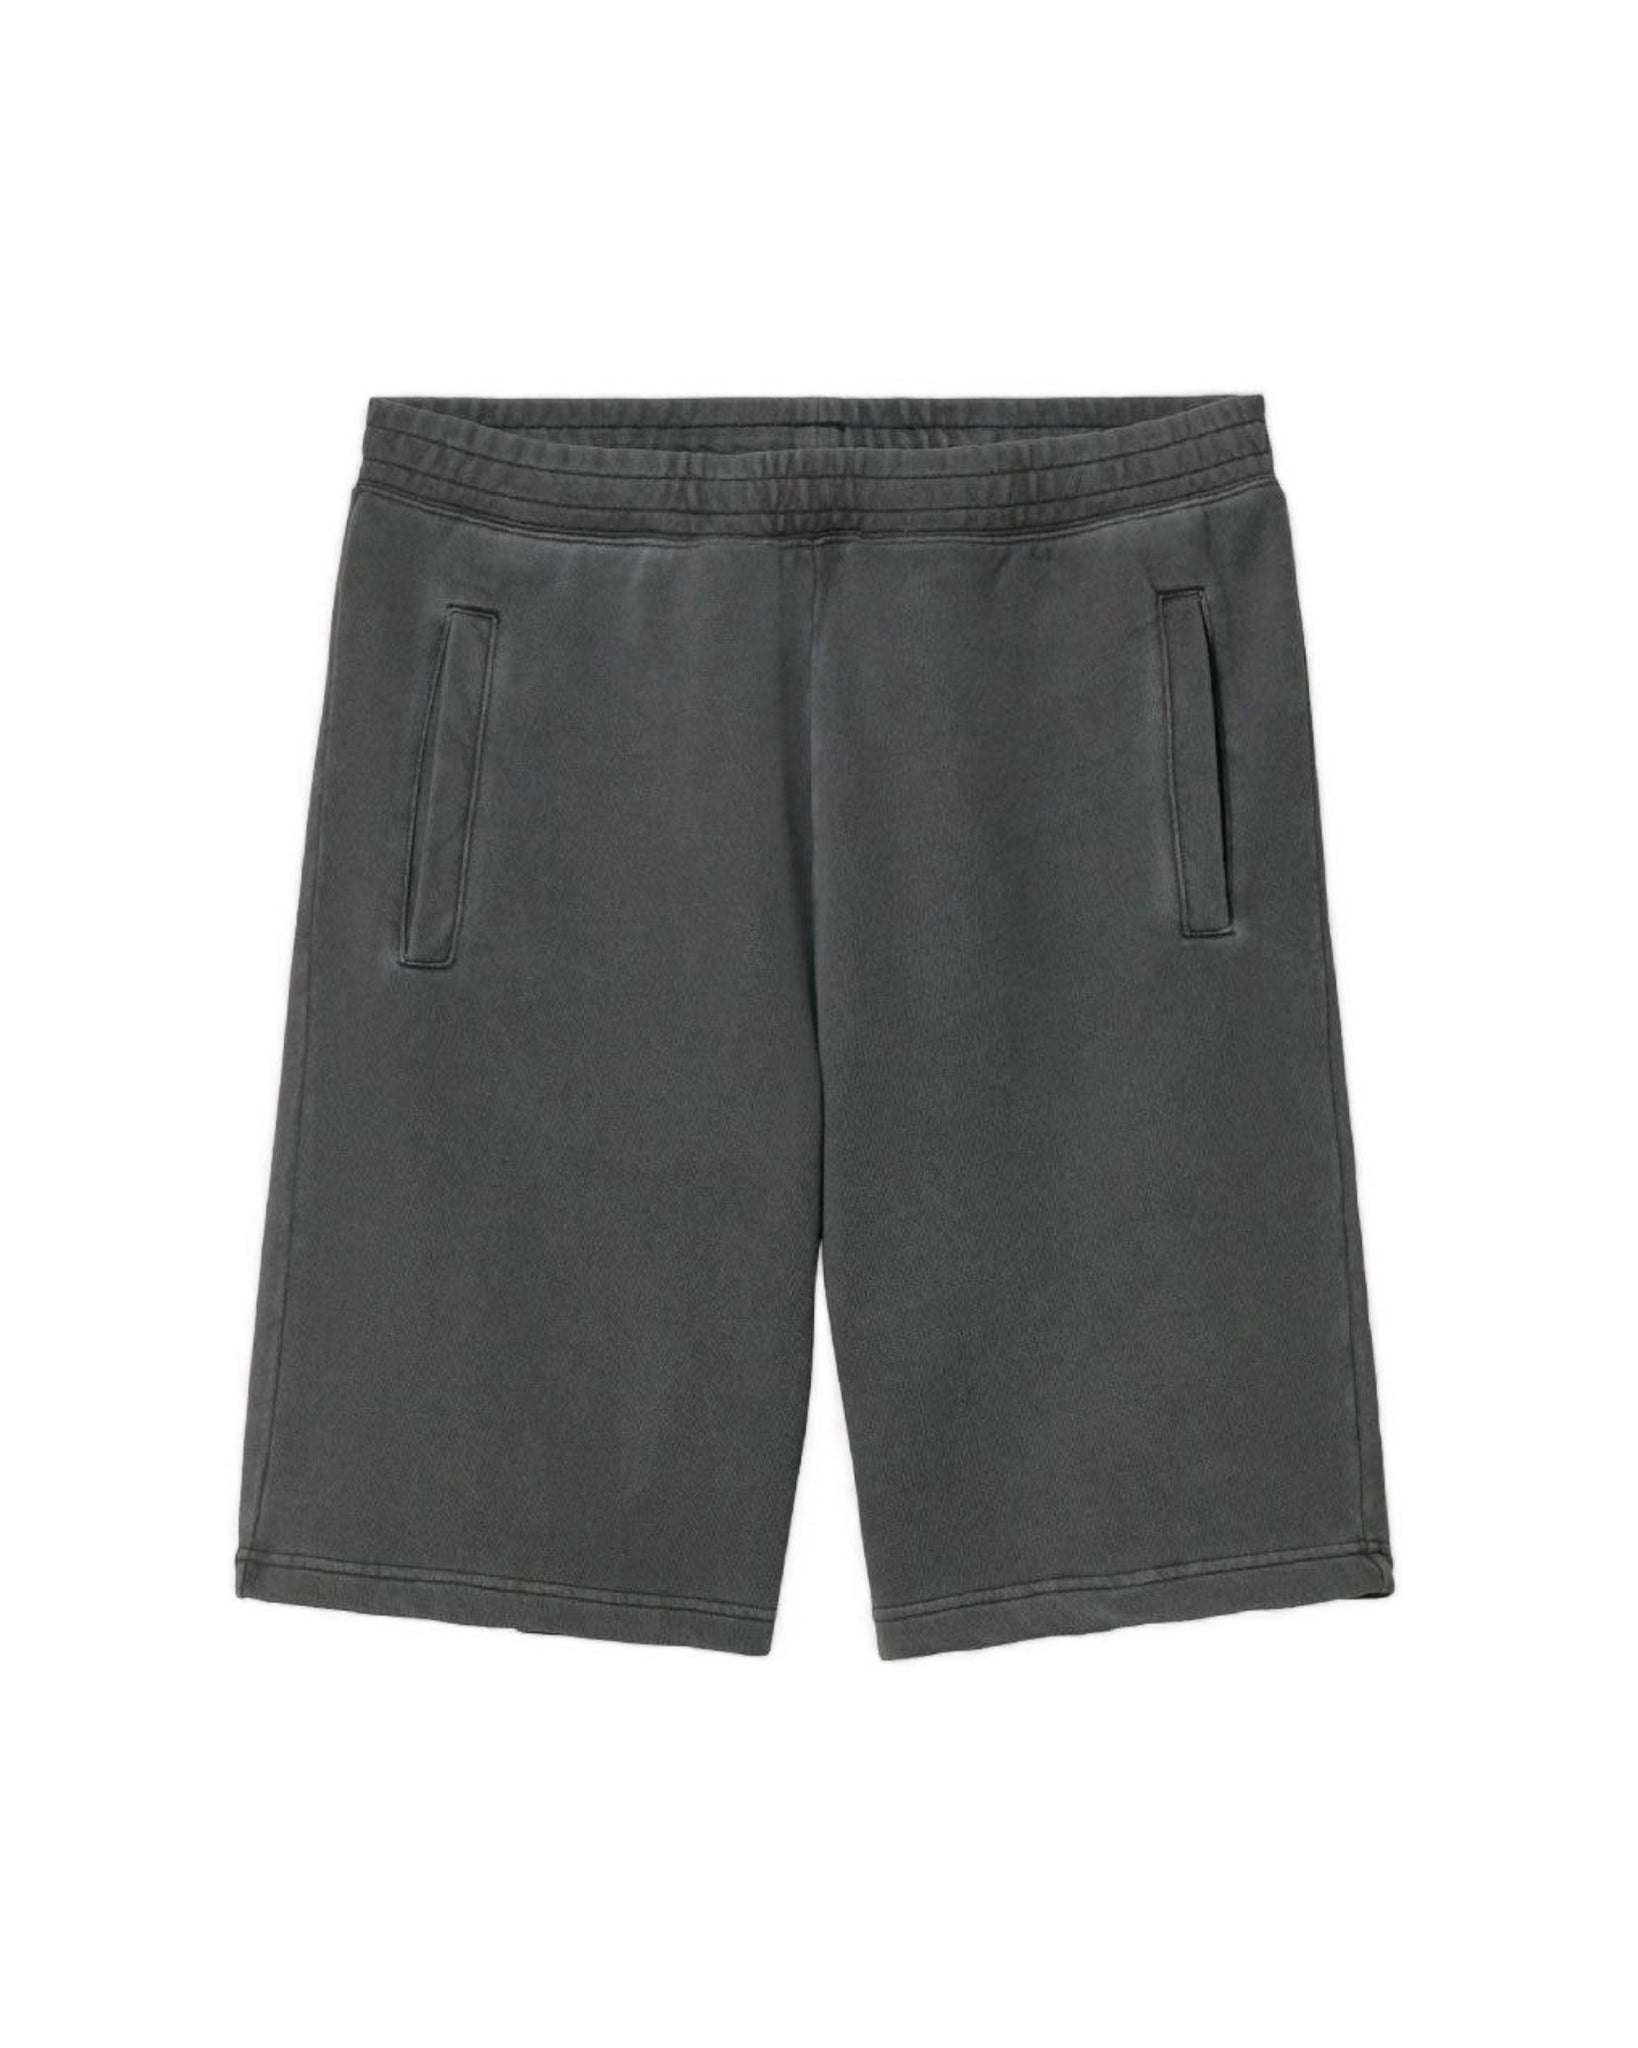 Pantalons Short Nelson Sweat - Charcoal (garment dyed)